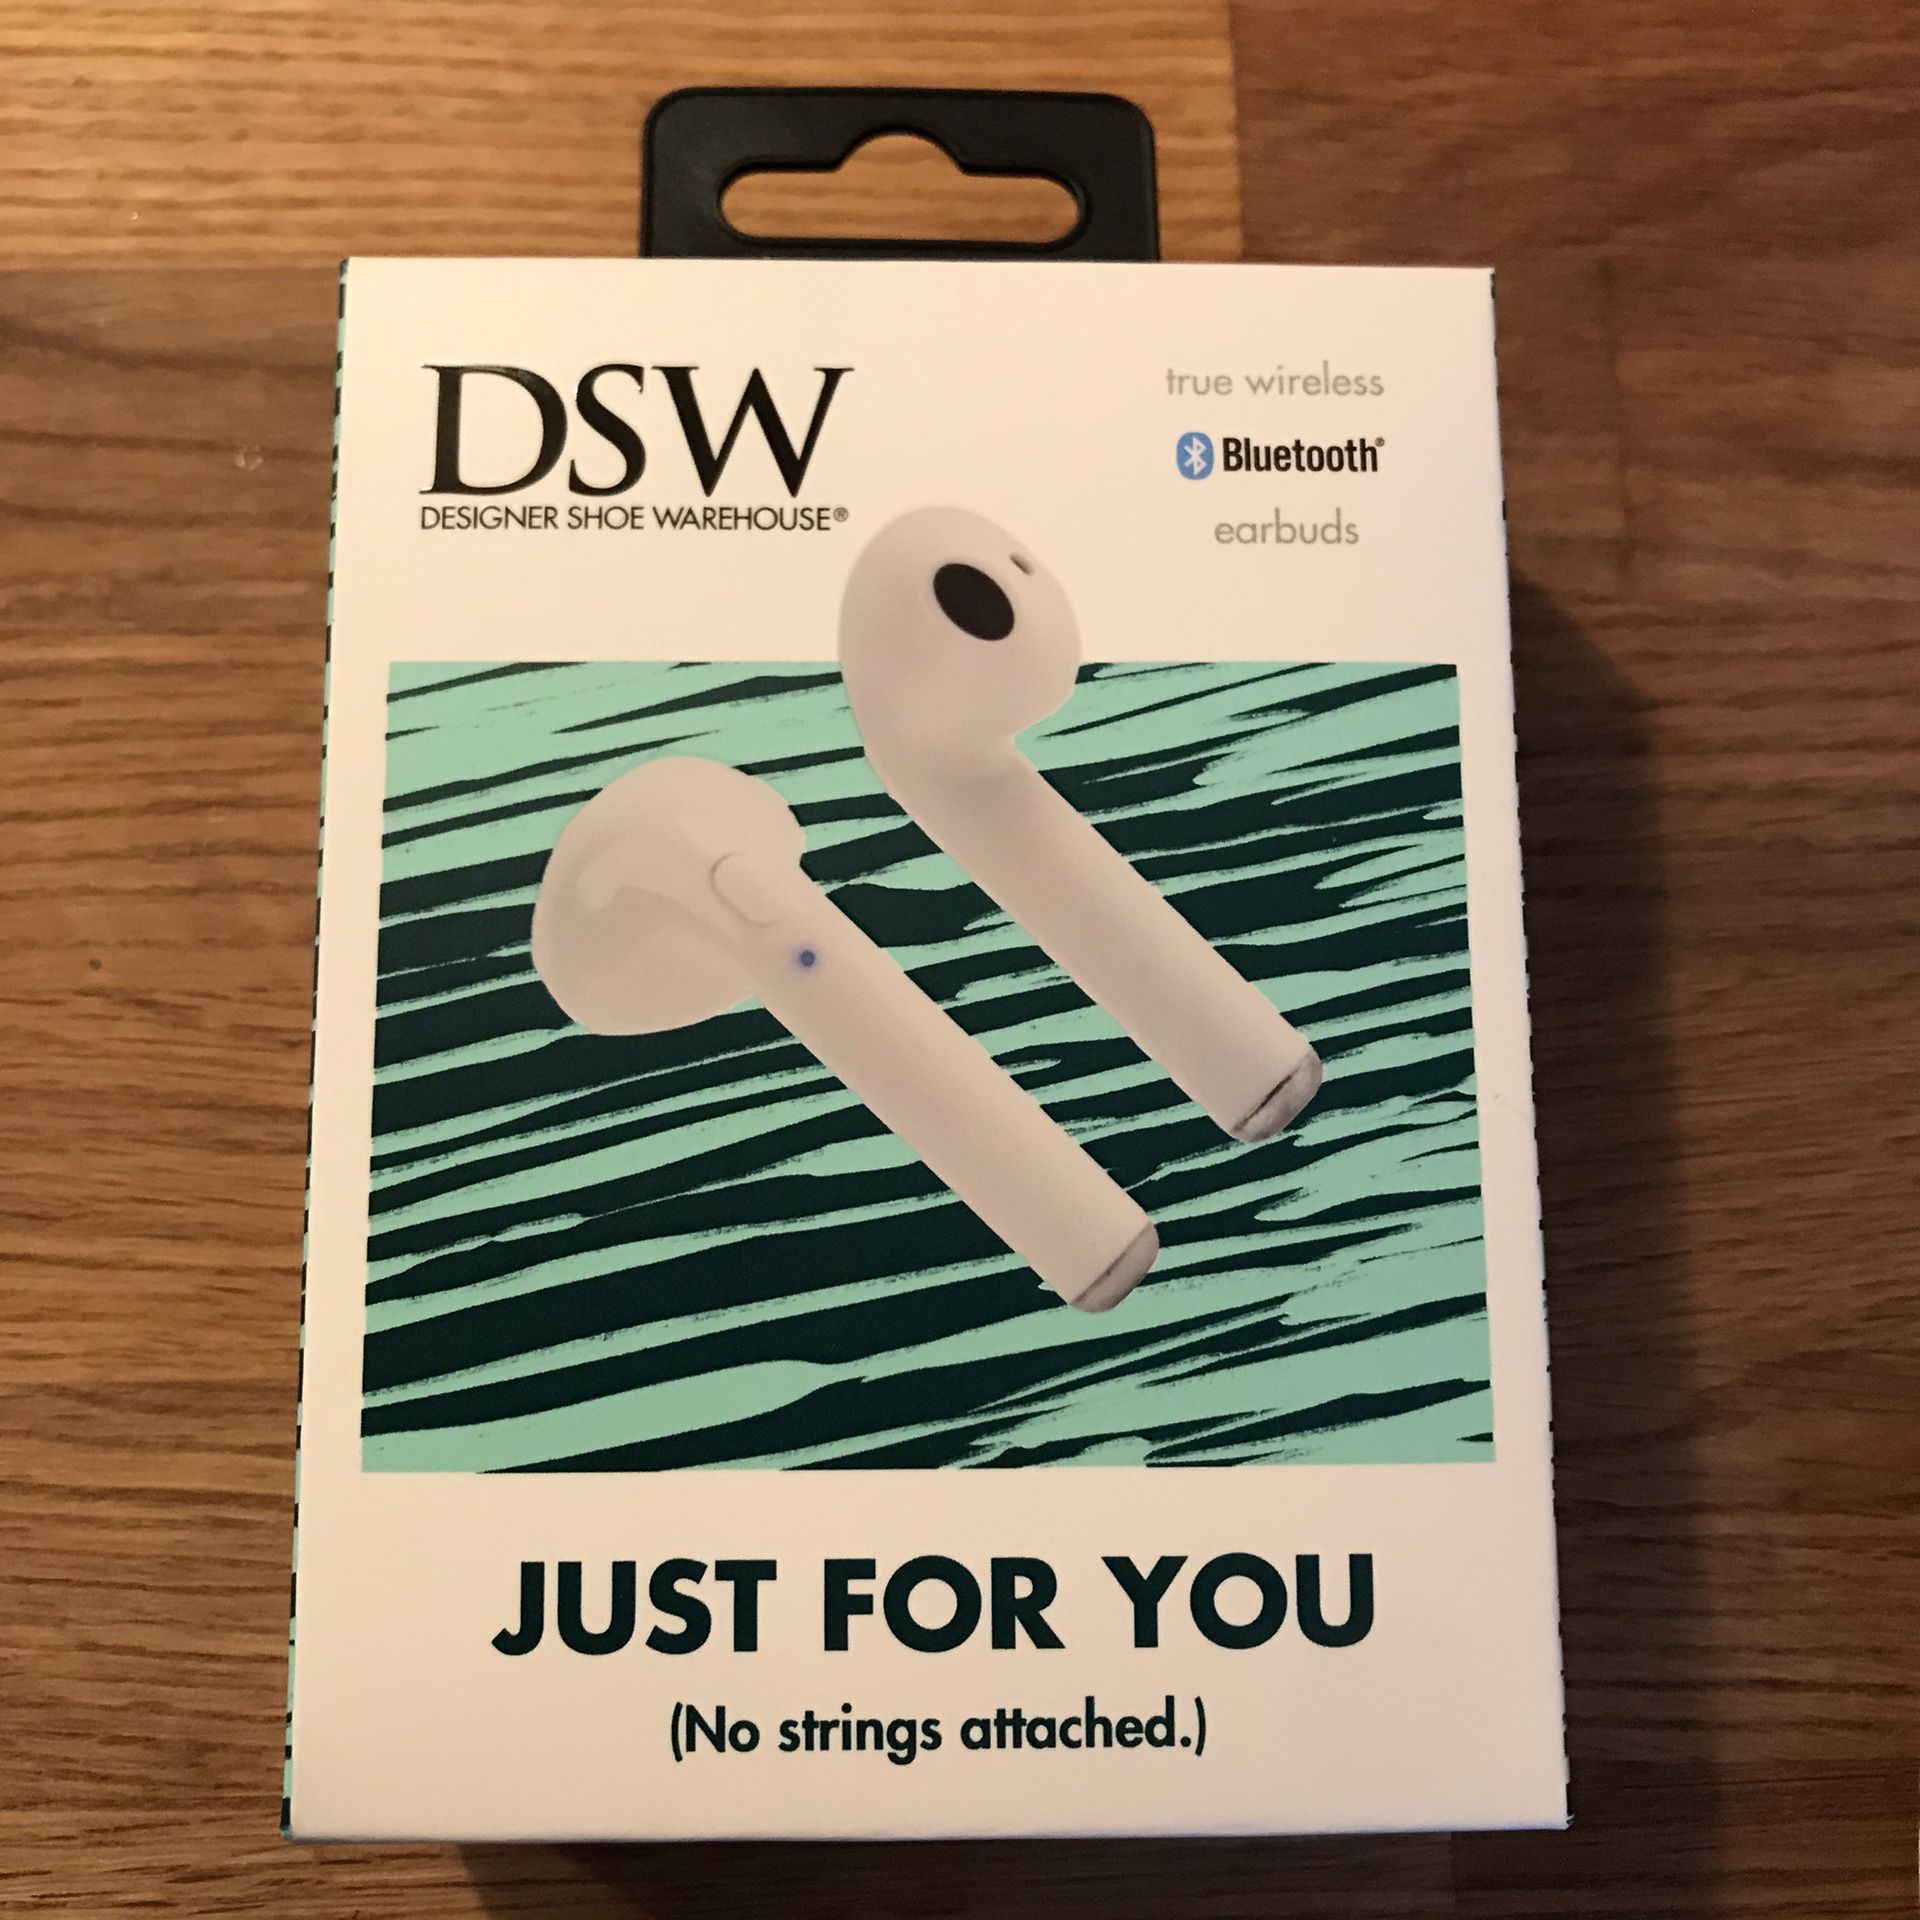 DSW Bluetooth wireless headphones